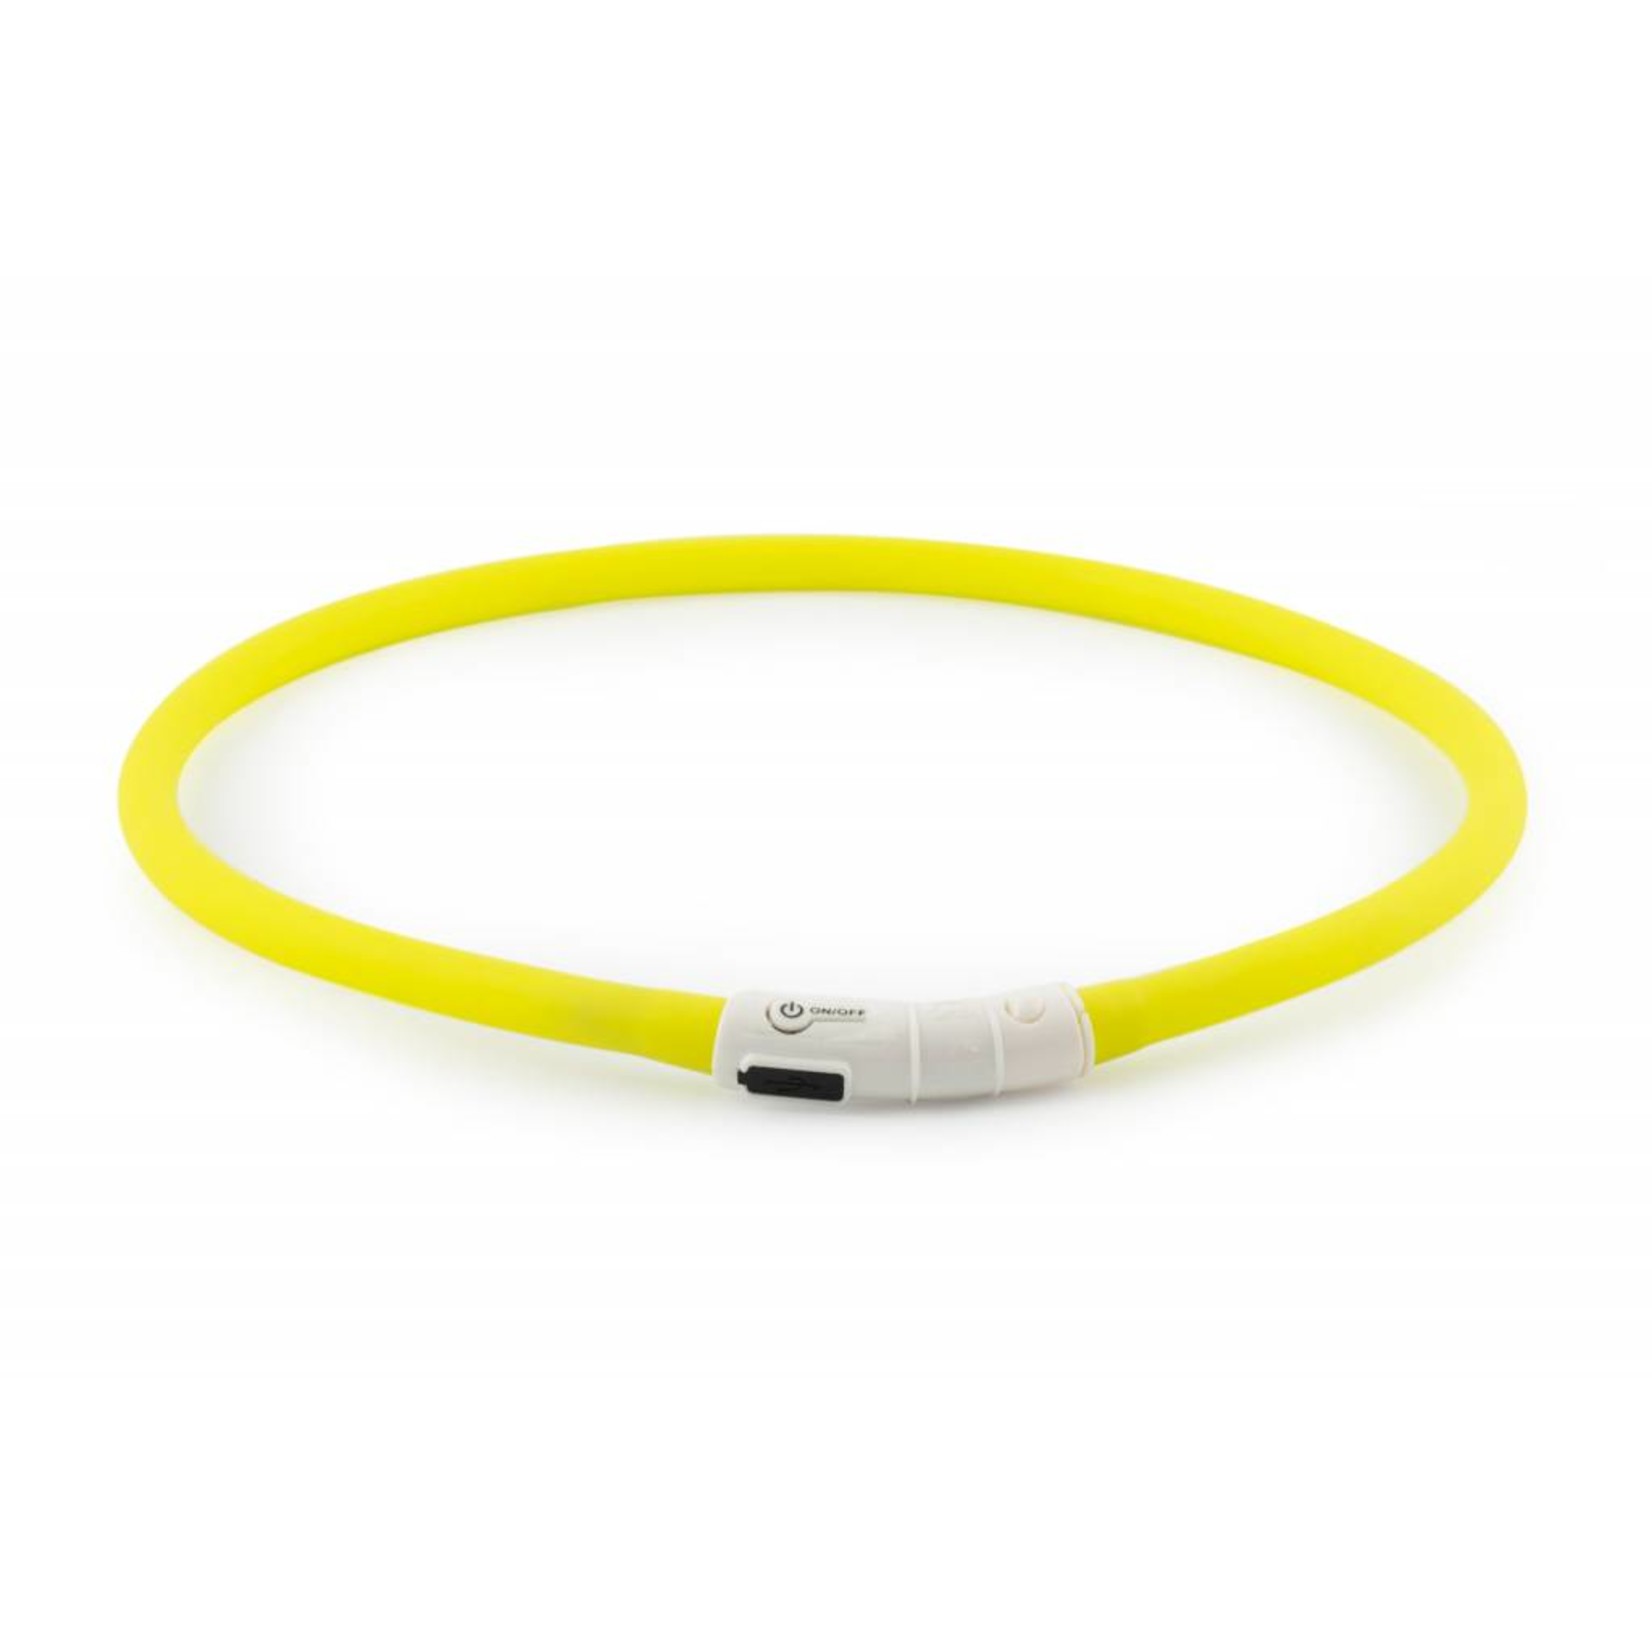 Ancol USB Dog Flashing Safety Band Collar, Cut to size